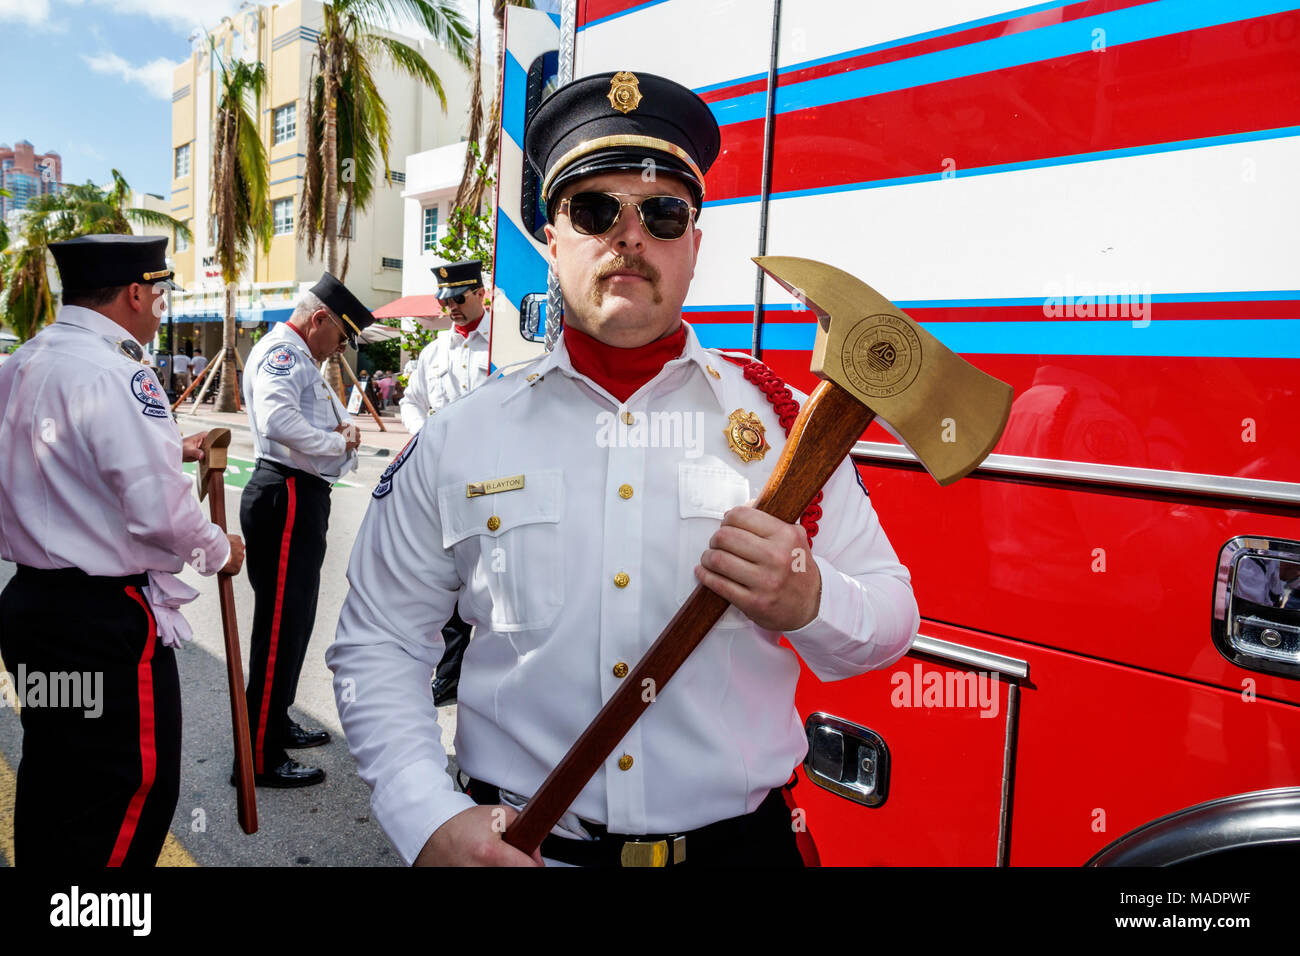 Miami Beach Florida,Veterans Day,parade staging area,Miami Beach,Fire Department,firefighter,formal uniform,ax,man men male,FL171117010 Stock Photo